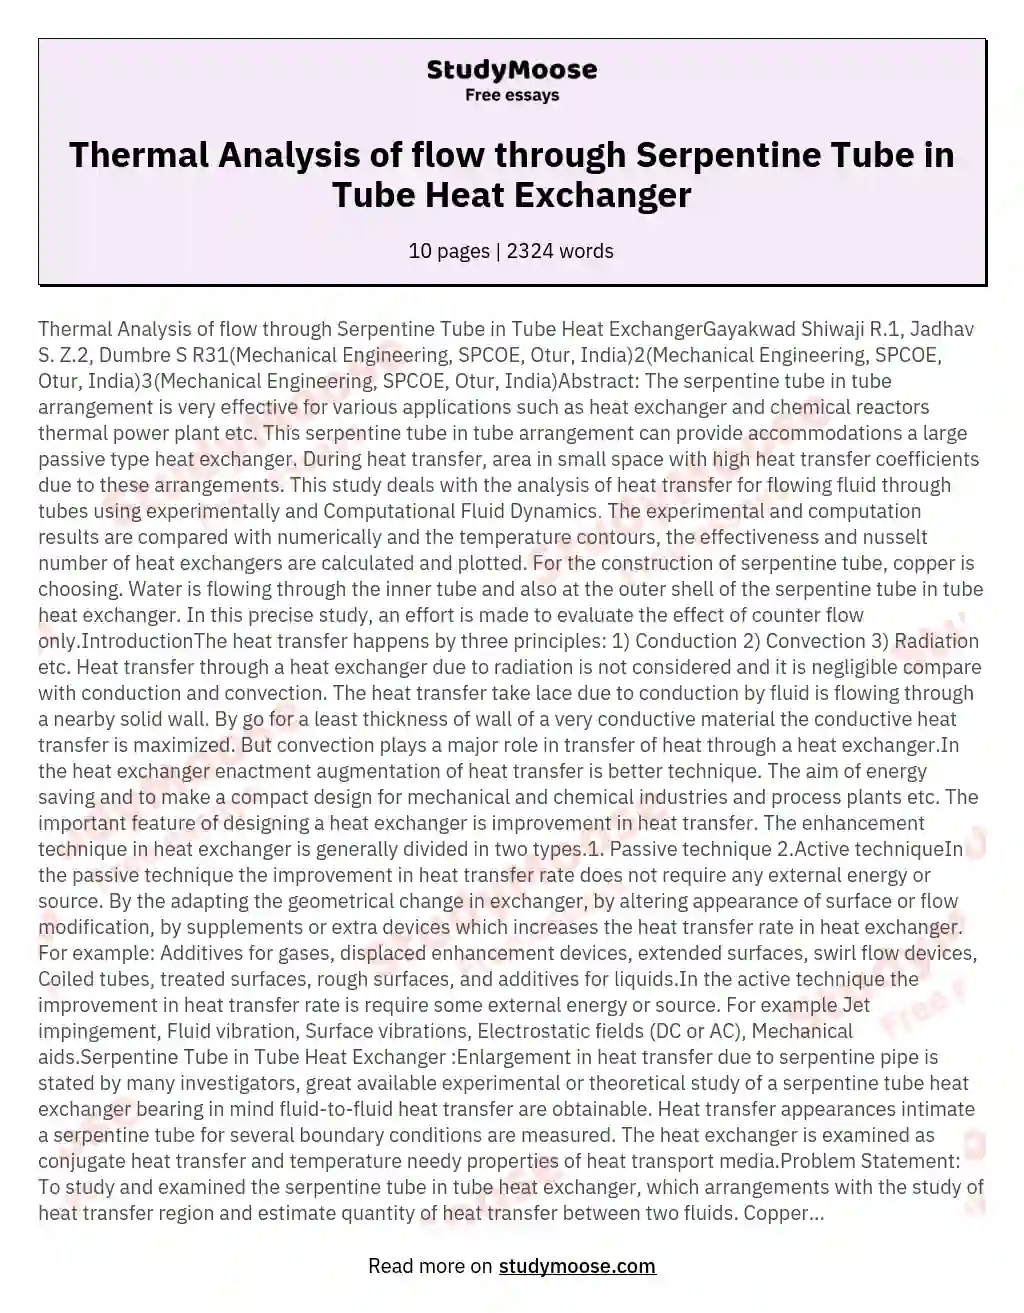 Thermal Analysis of flow through Serpentine Tube in Tube Heat Exchanger essay